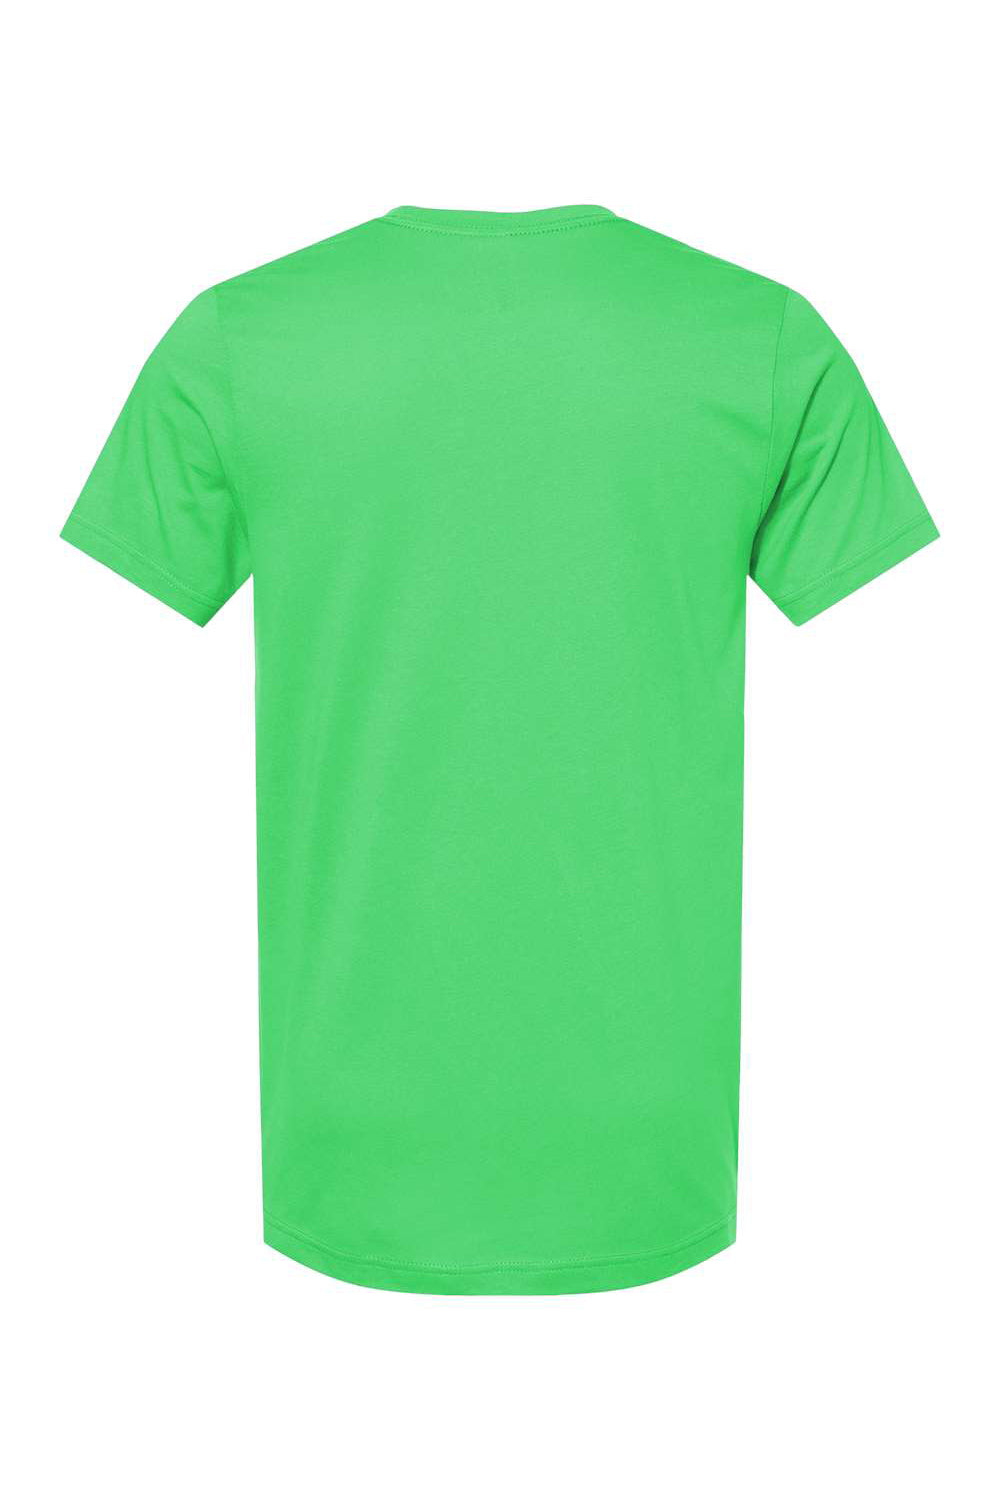 Bella + Canvas BC3001/3001C Mens Jersey Short Sleeve Crewneck T-Shirt Synthetic Green Flat Back